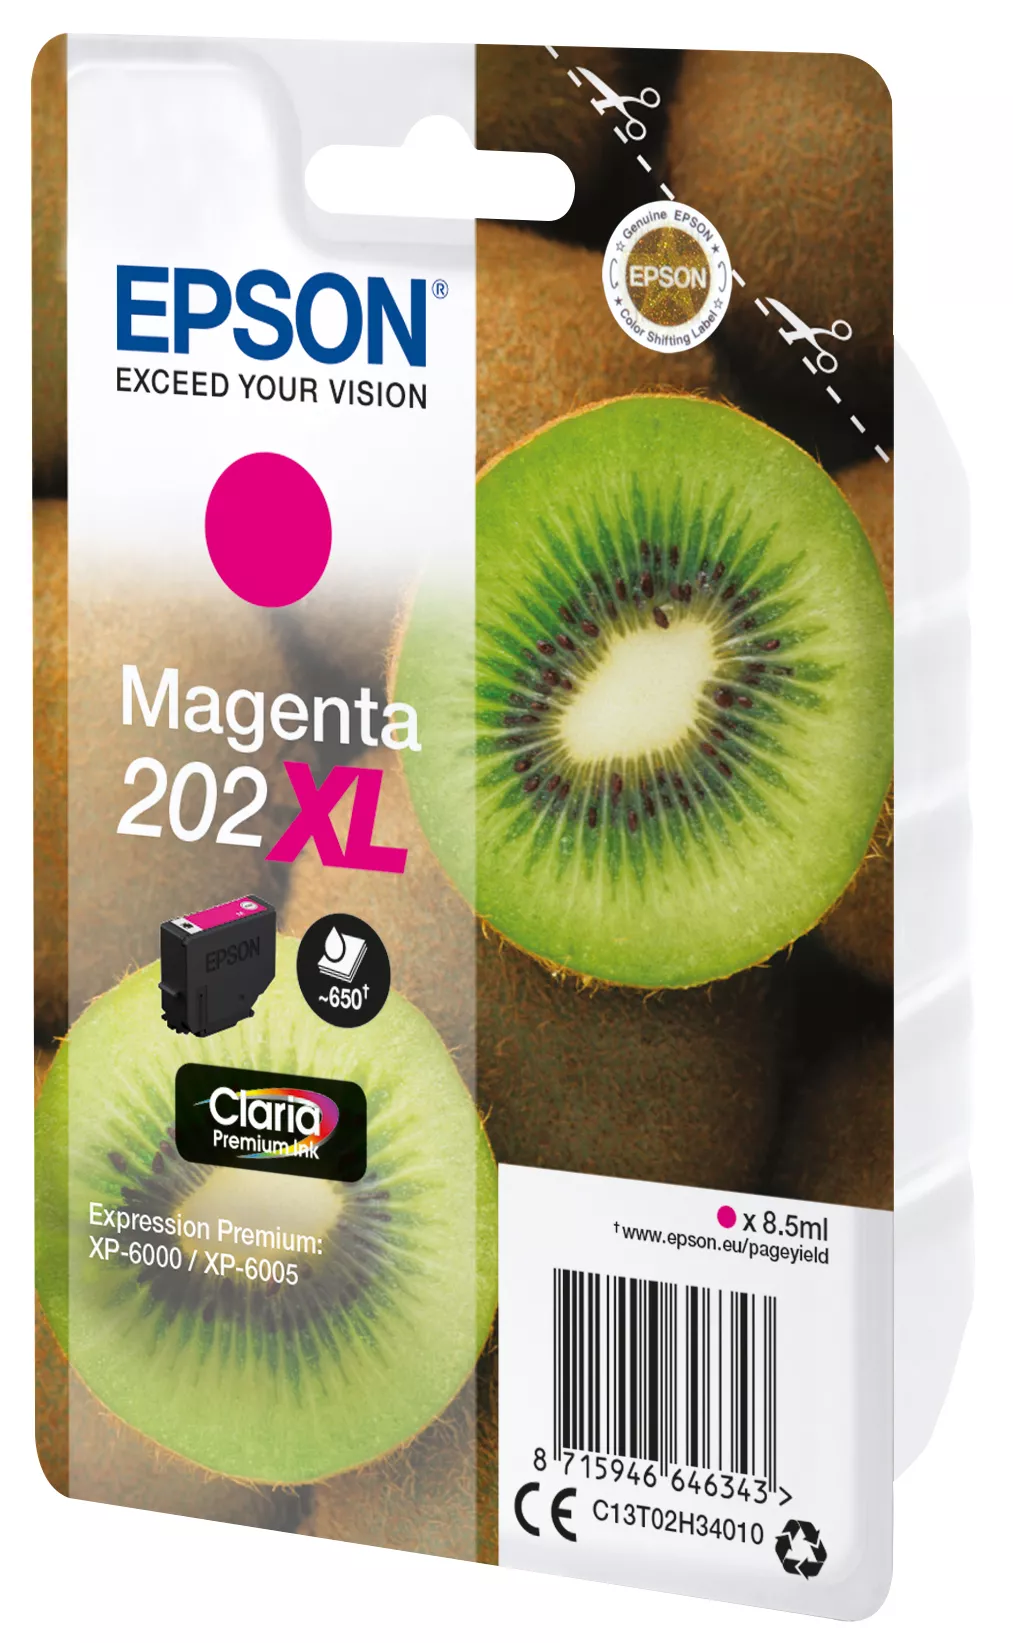 Vente Epson Kiwi Singlepack Magenta 202XL Claria Premium Ink Epson au meilleur prix - visuel 2